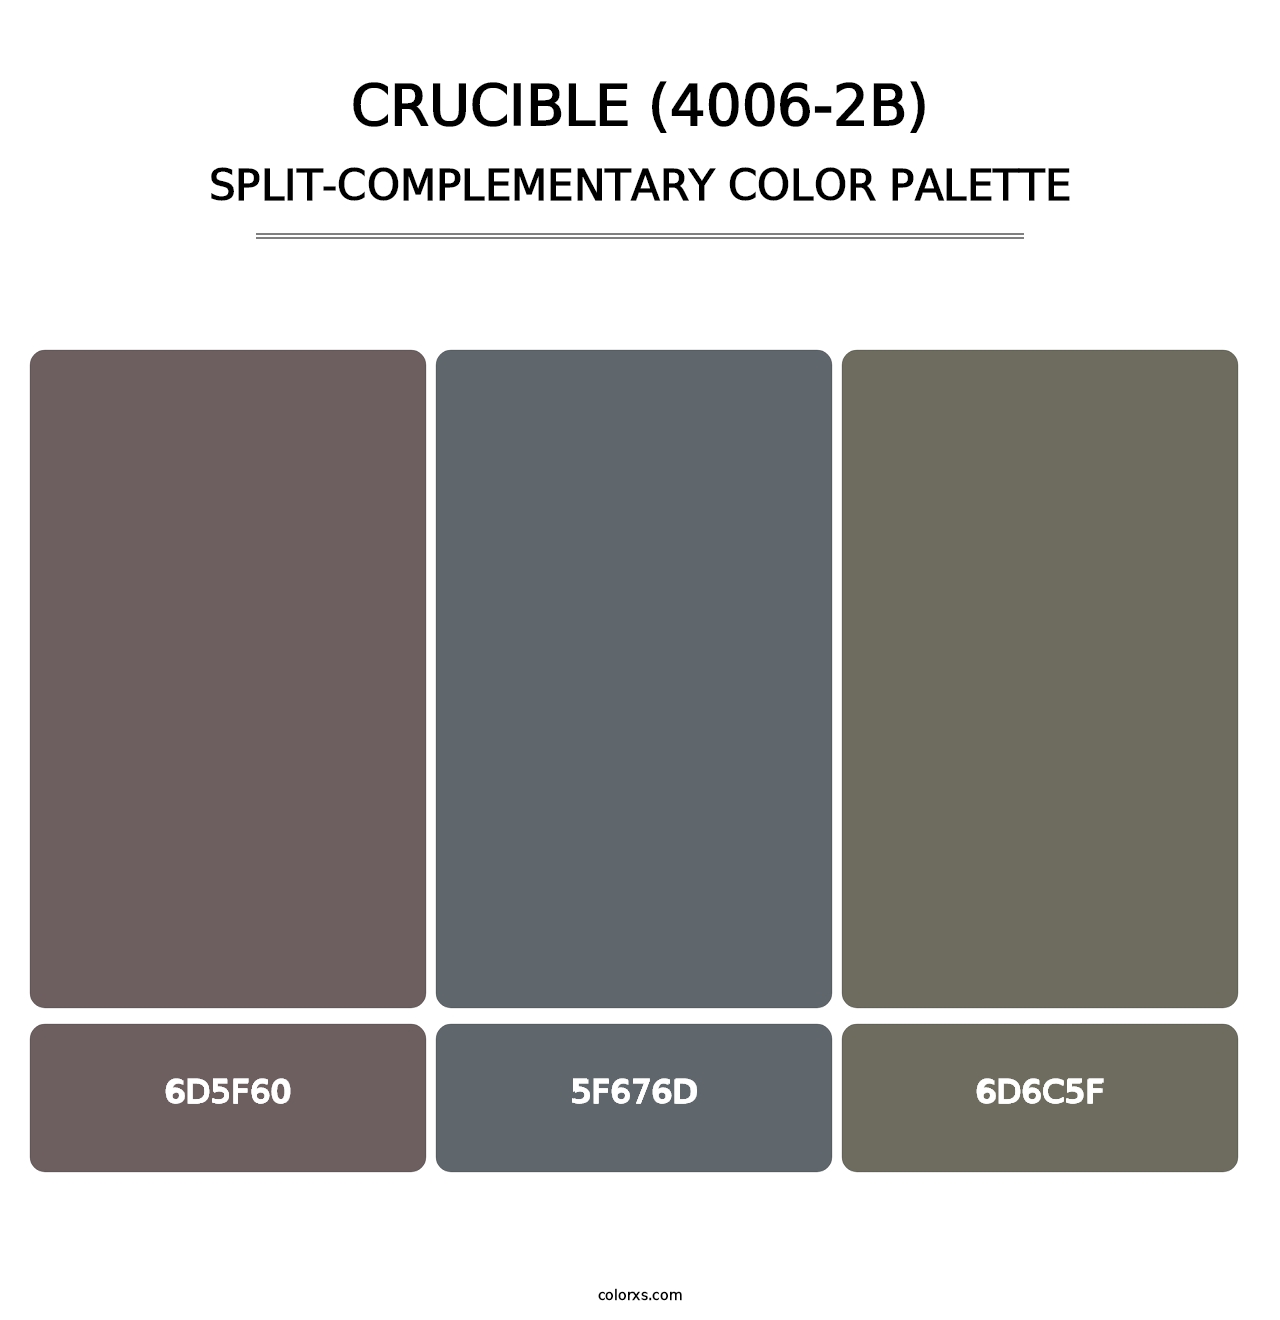 Crucible (4006-2B) - Split-Complementary Color Palette